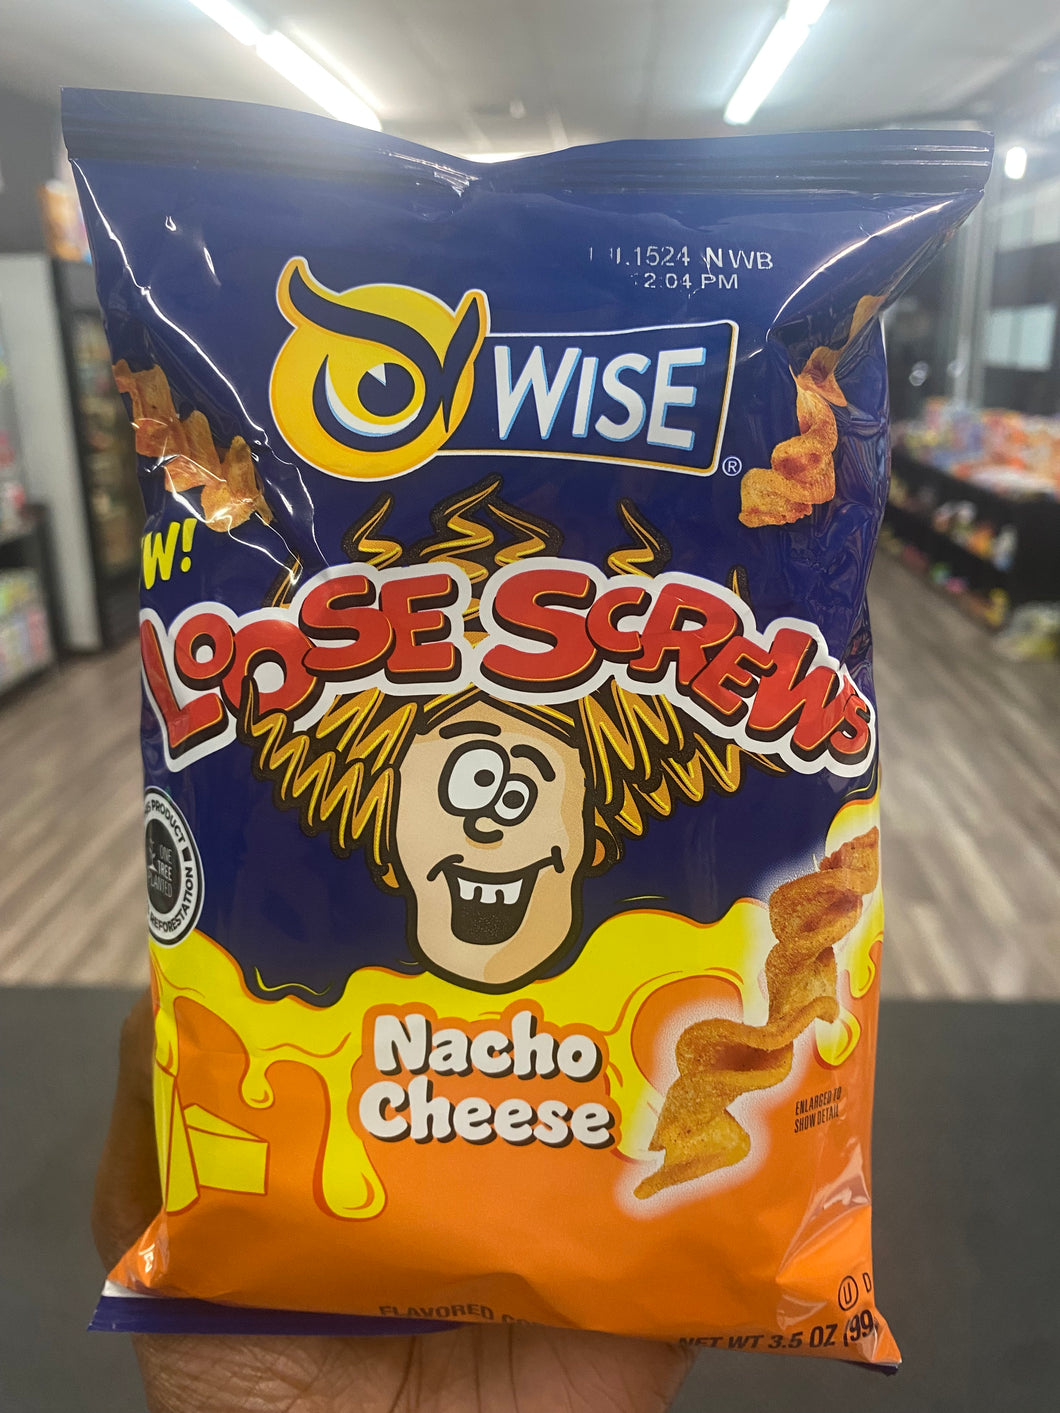 Wise Loose Screws Nacho Cheese(USA)